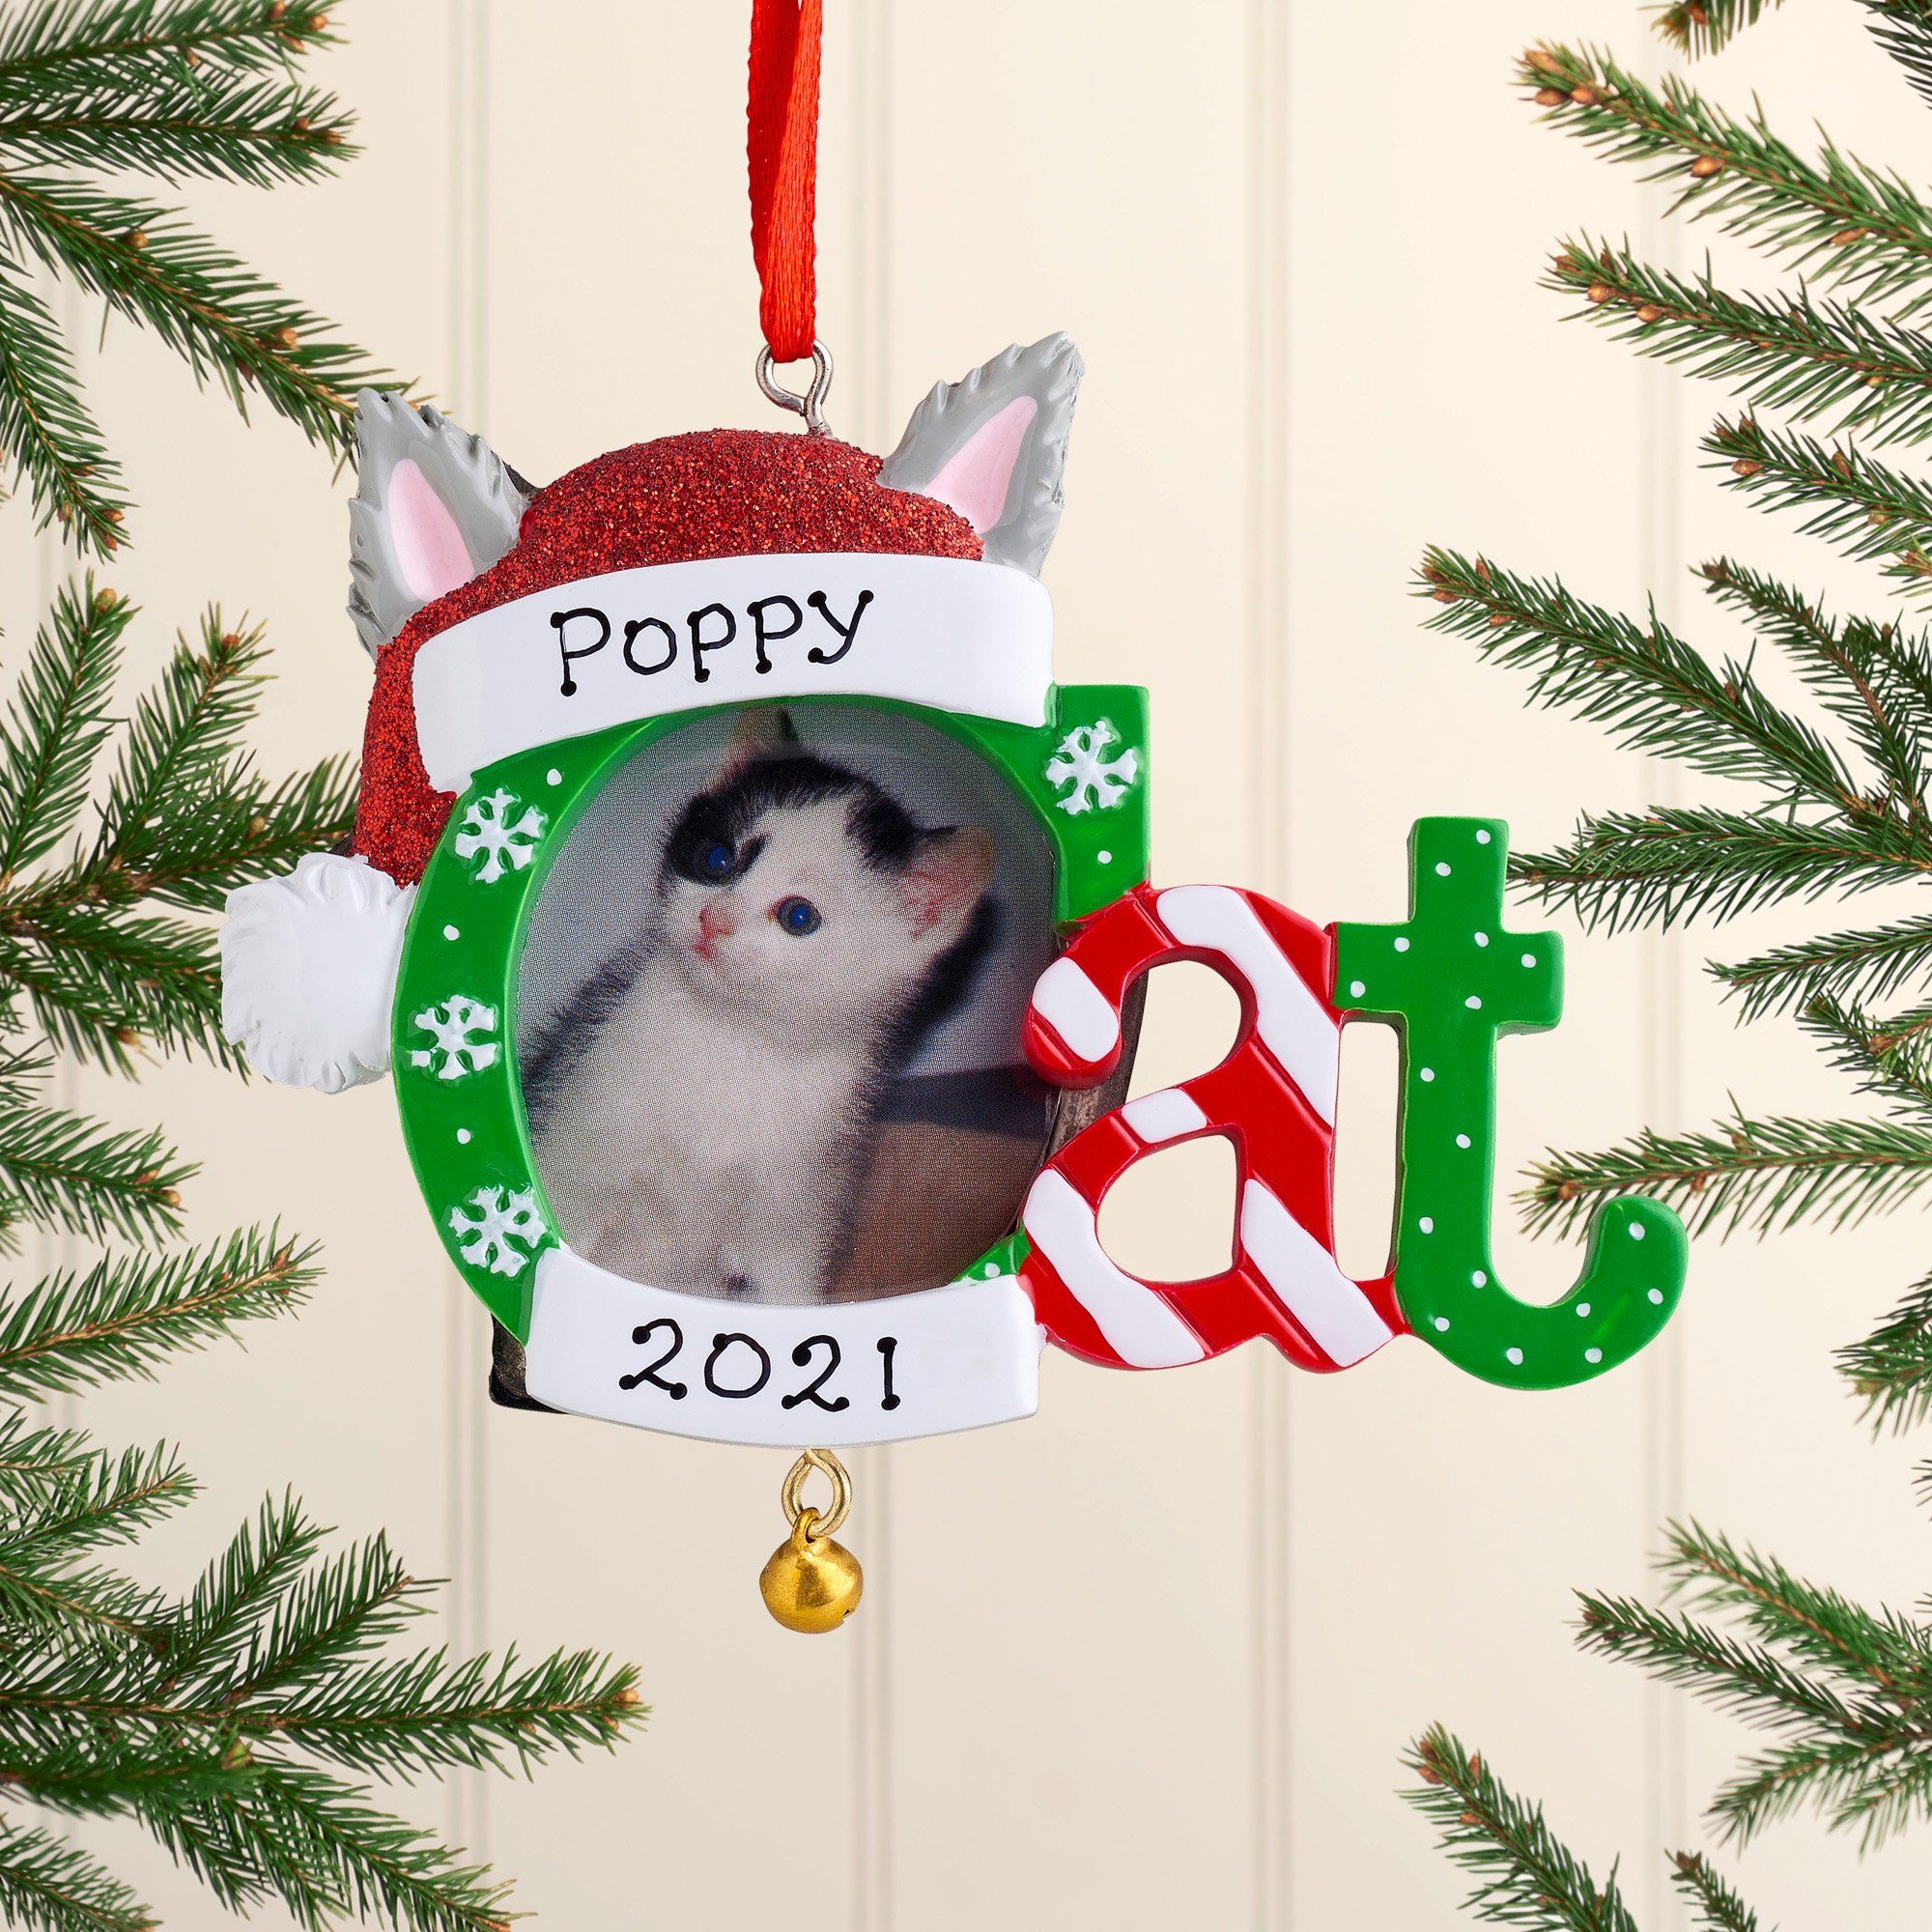 Christmas Ornament - Personalised Christmas Xmas Tree Decoration Ornament - Dog/Cat Photo Frames